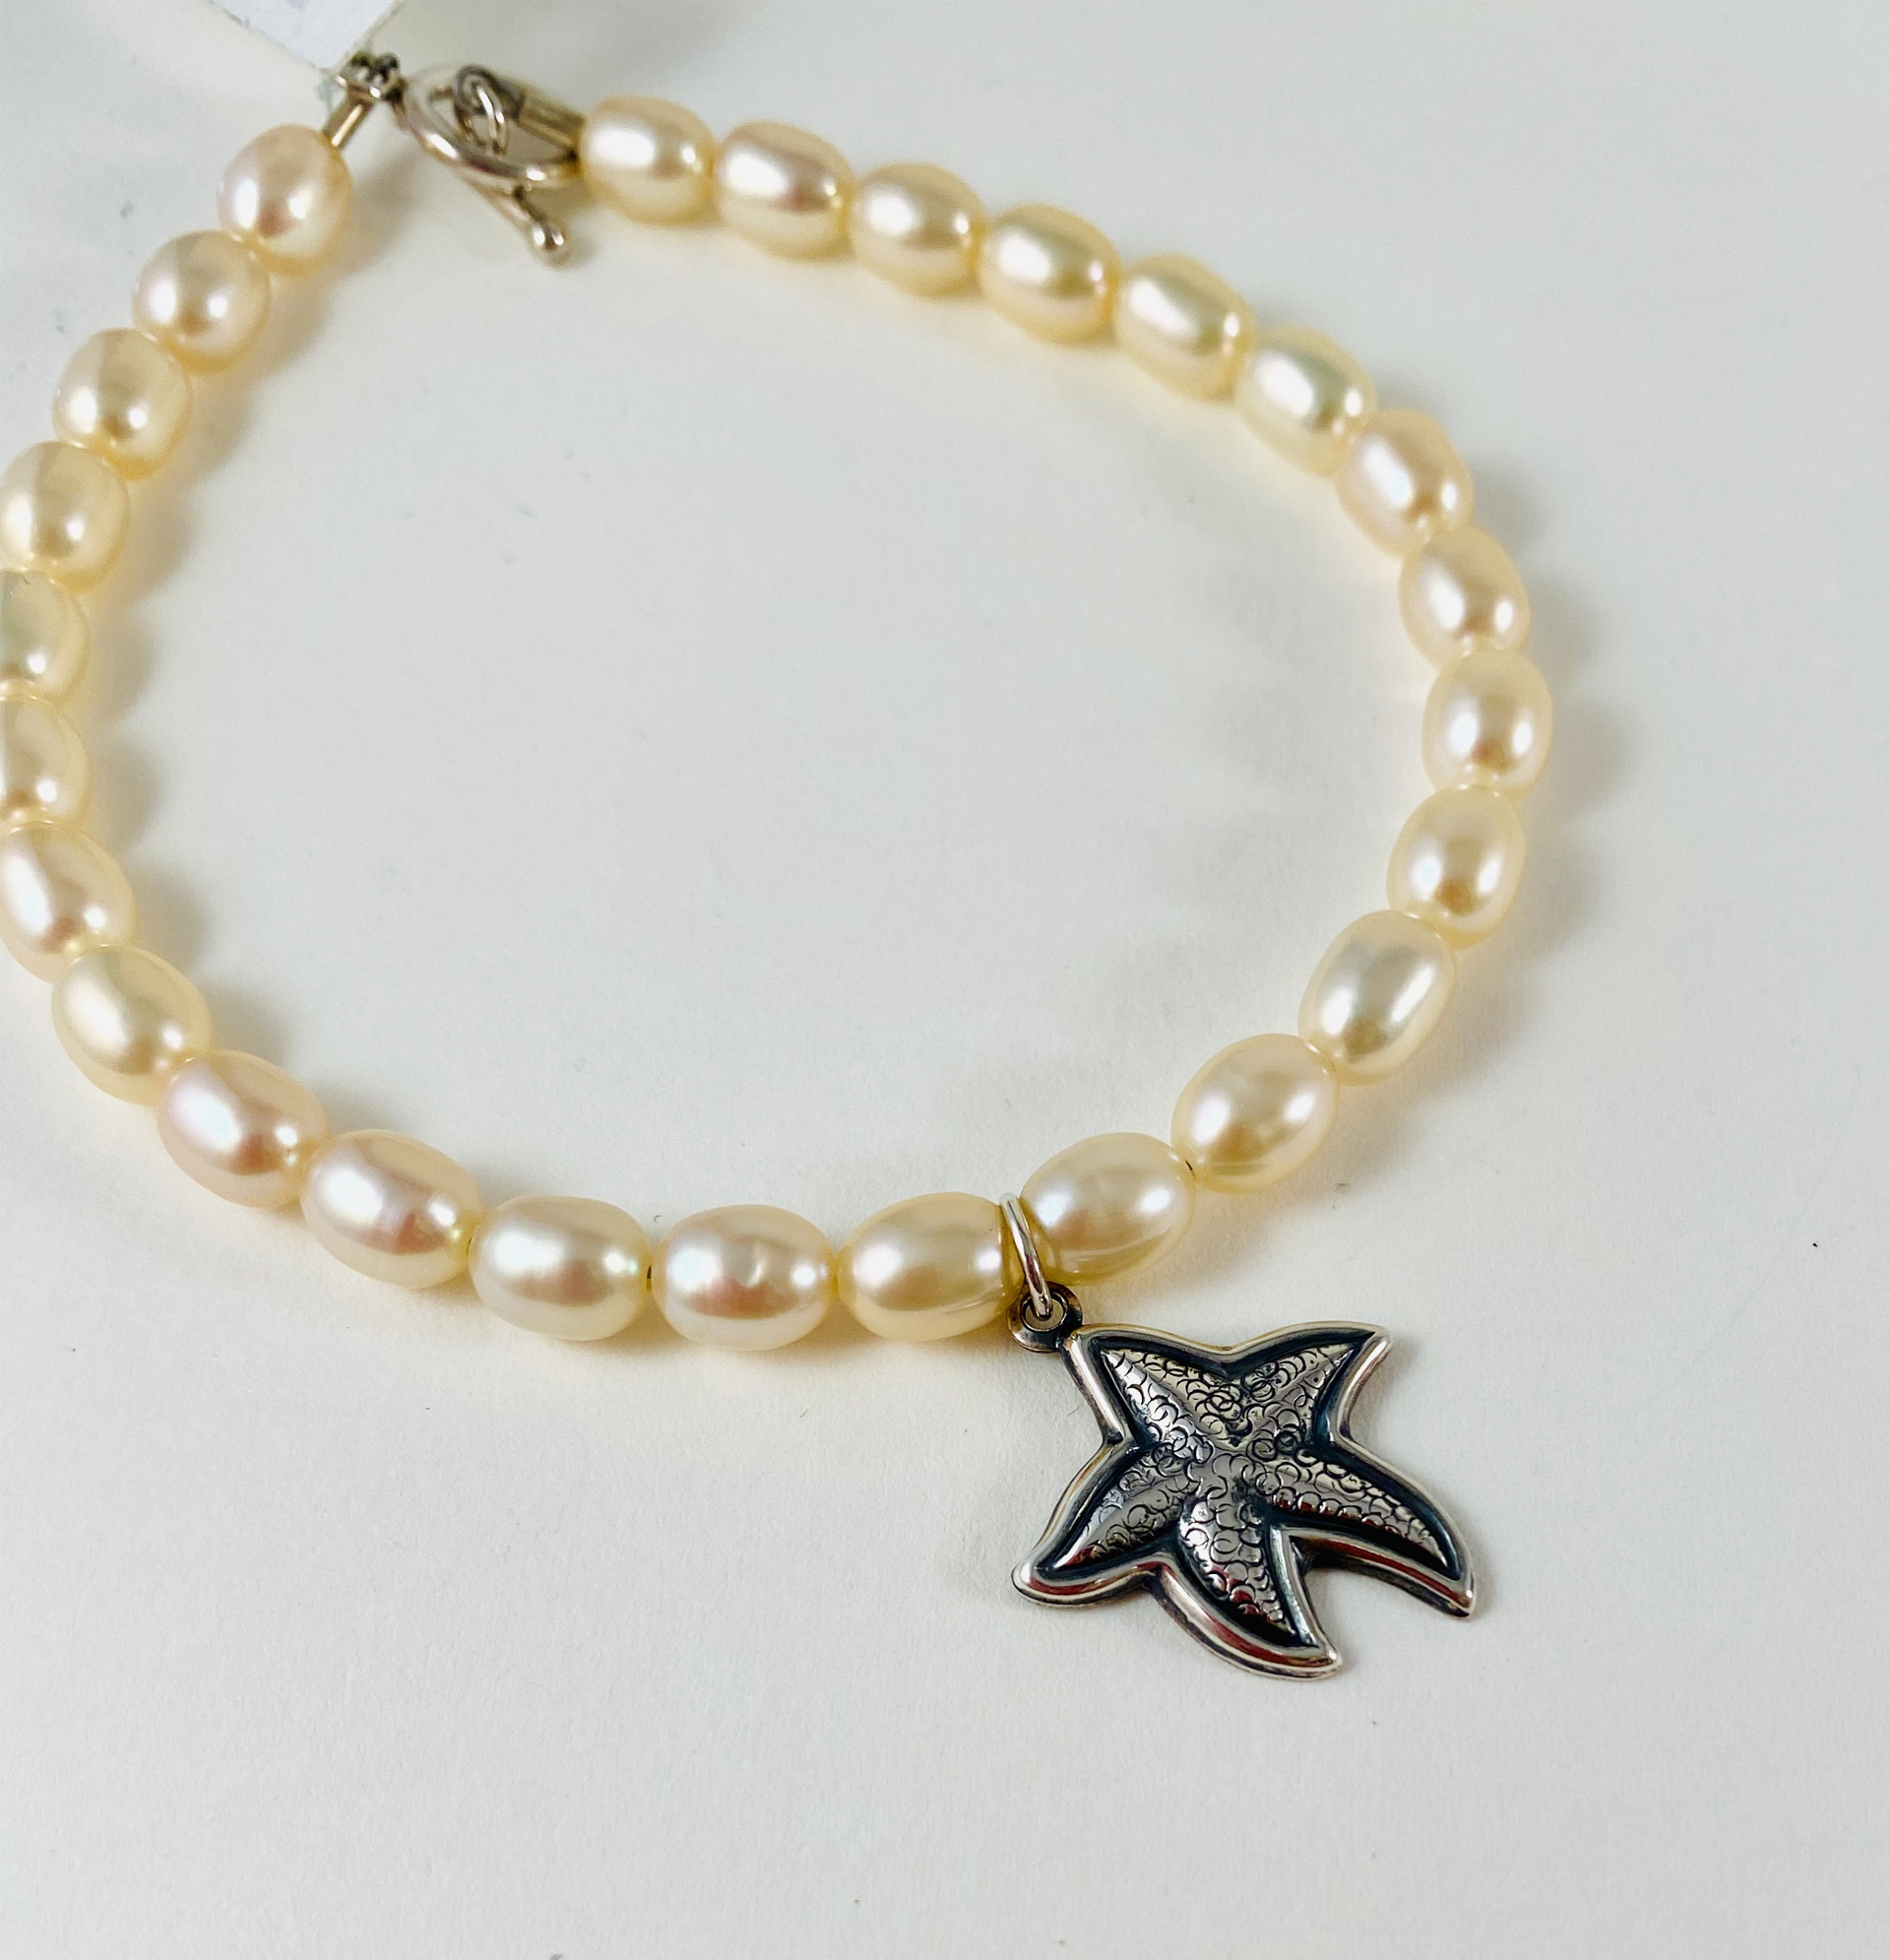 Peach Pearl Bracelet, starfish charm P12 by Nance Trueworthy